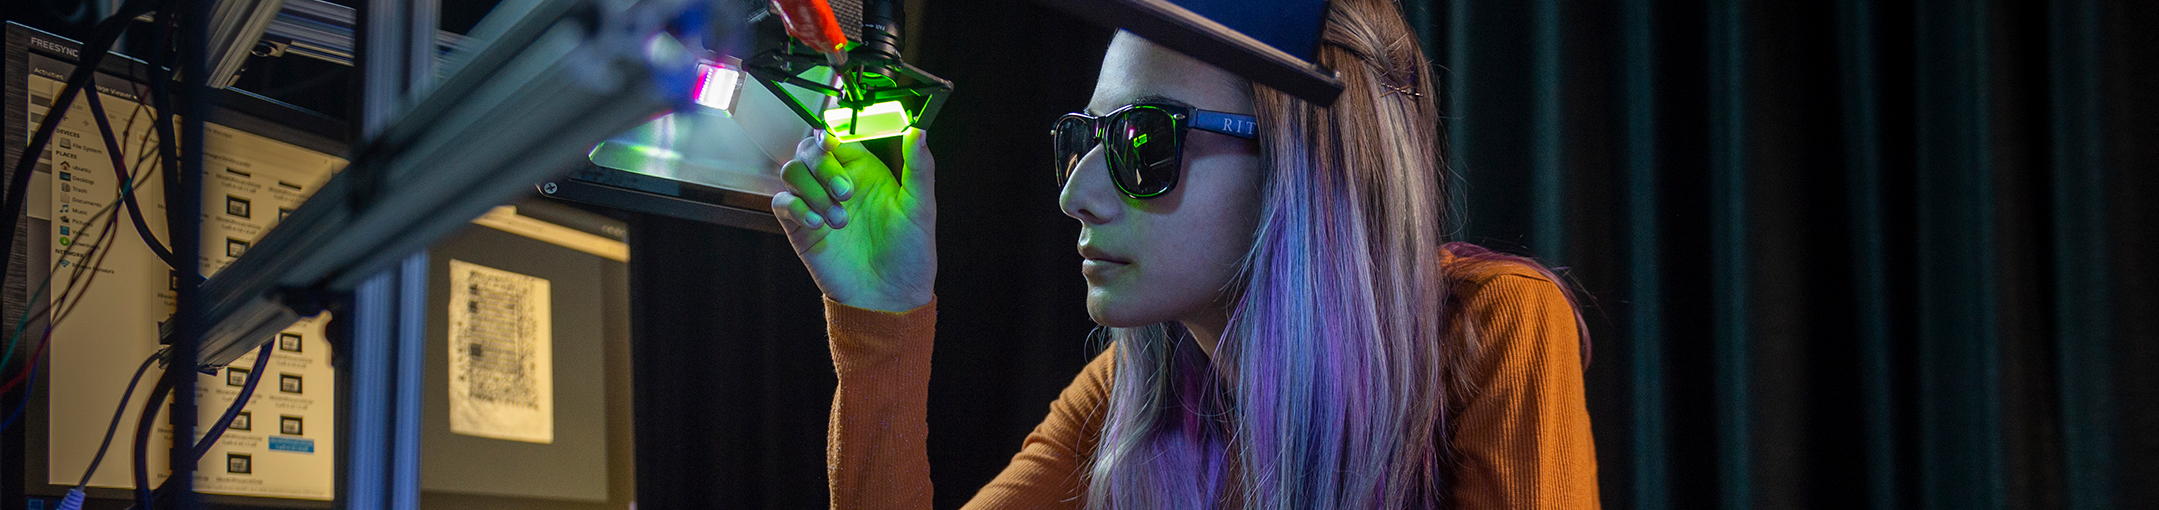 female student using ultraviolet fluorescence imaging